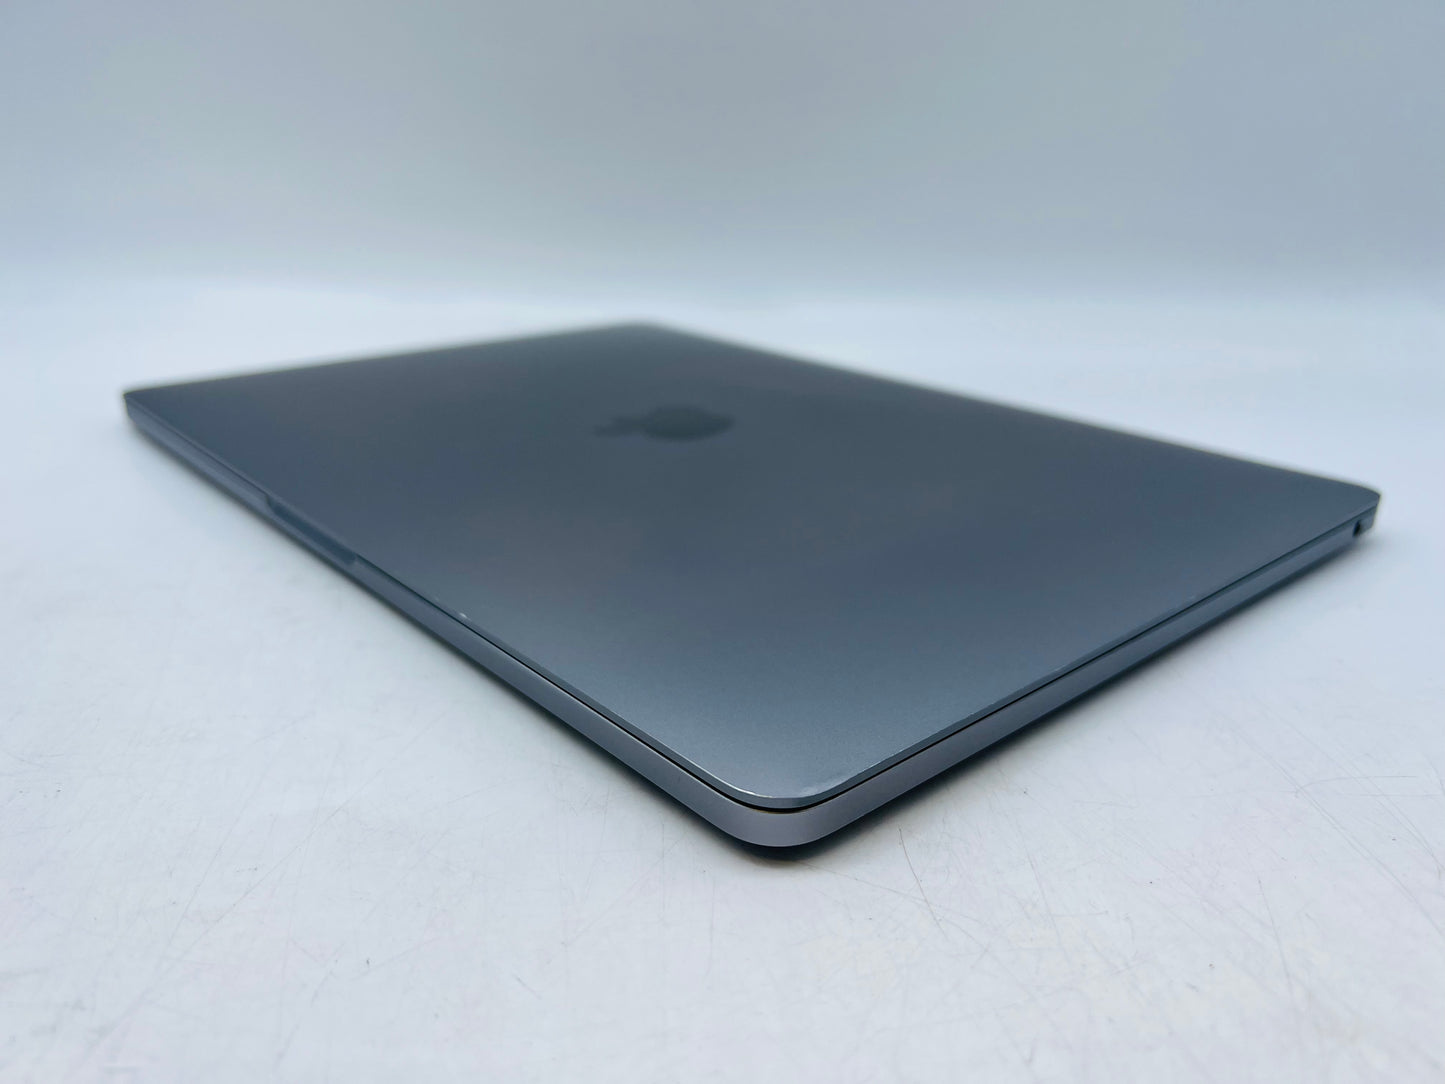 Apple 2019 13 in MacBook Pro TB 1.4GHz Quad-Core i5 16GB RAM 256GB SSD IIPG655